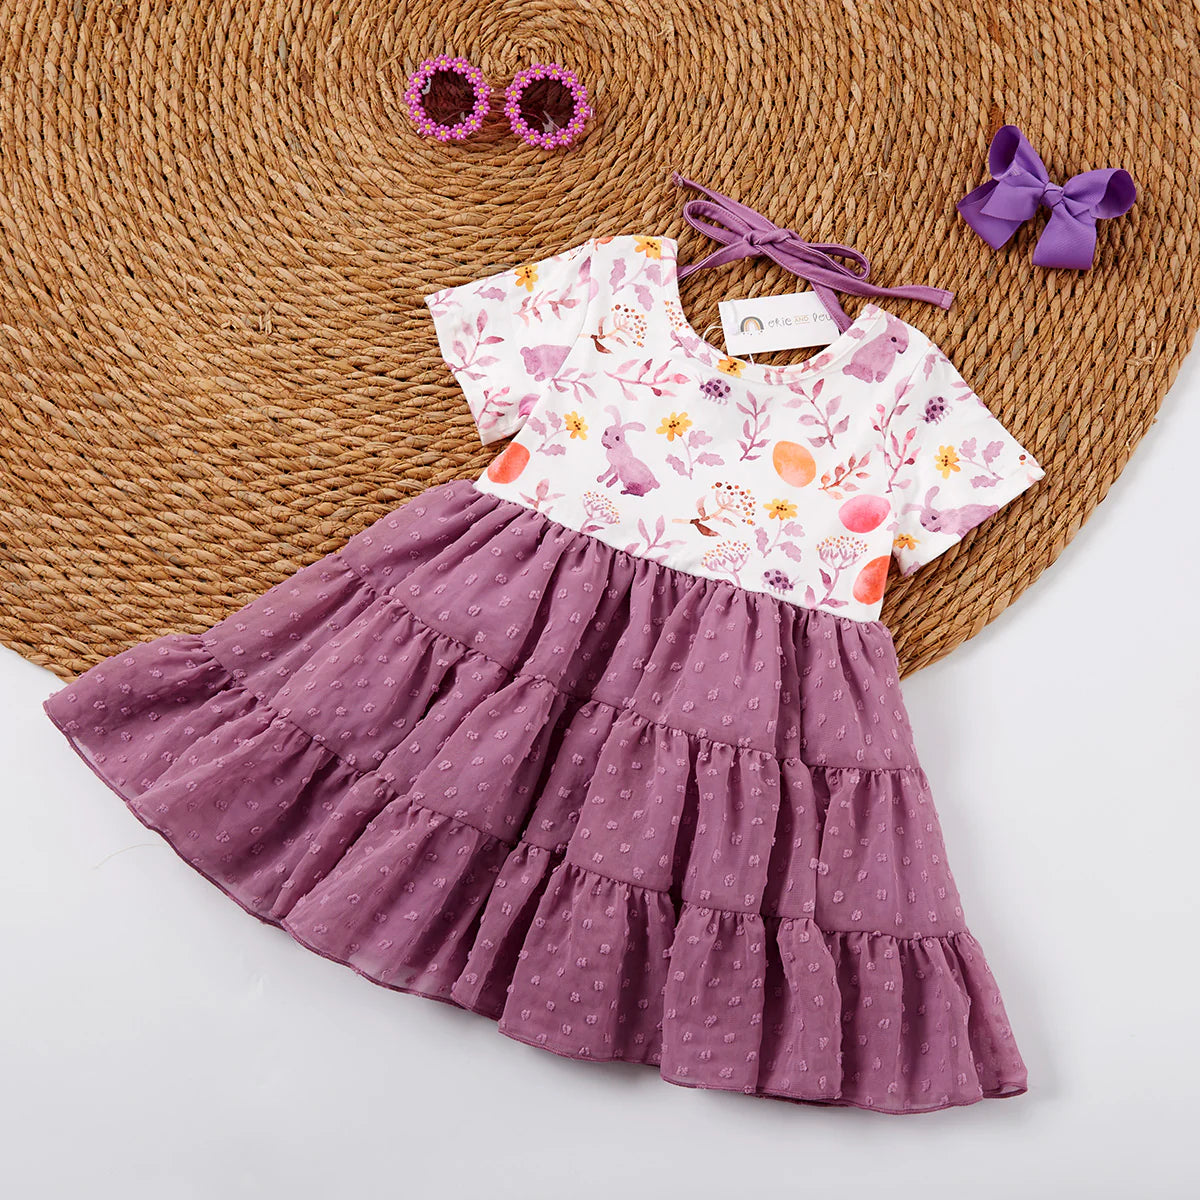 Blooming Pastel Boysenberry Dress